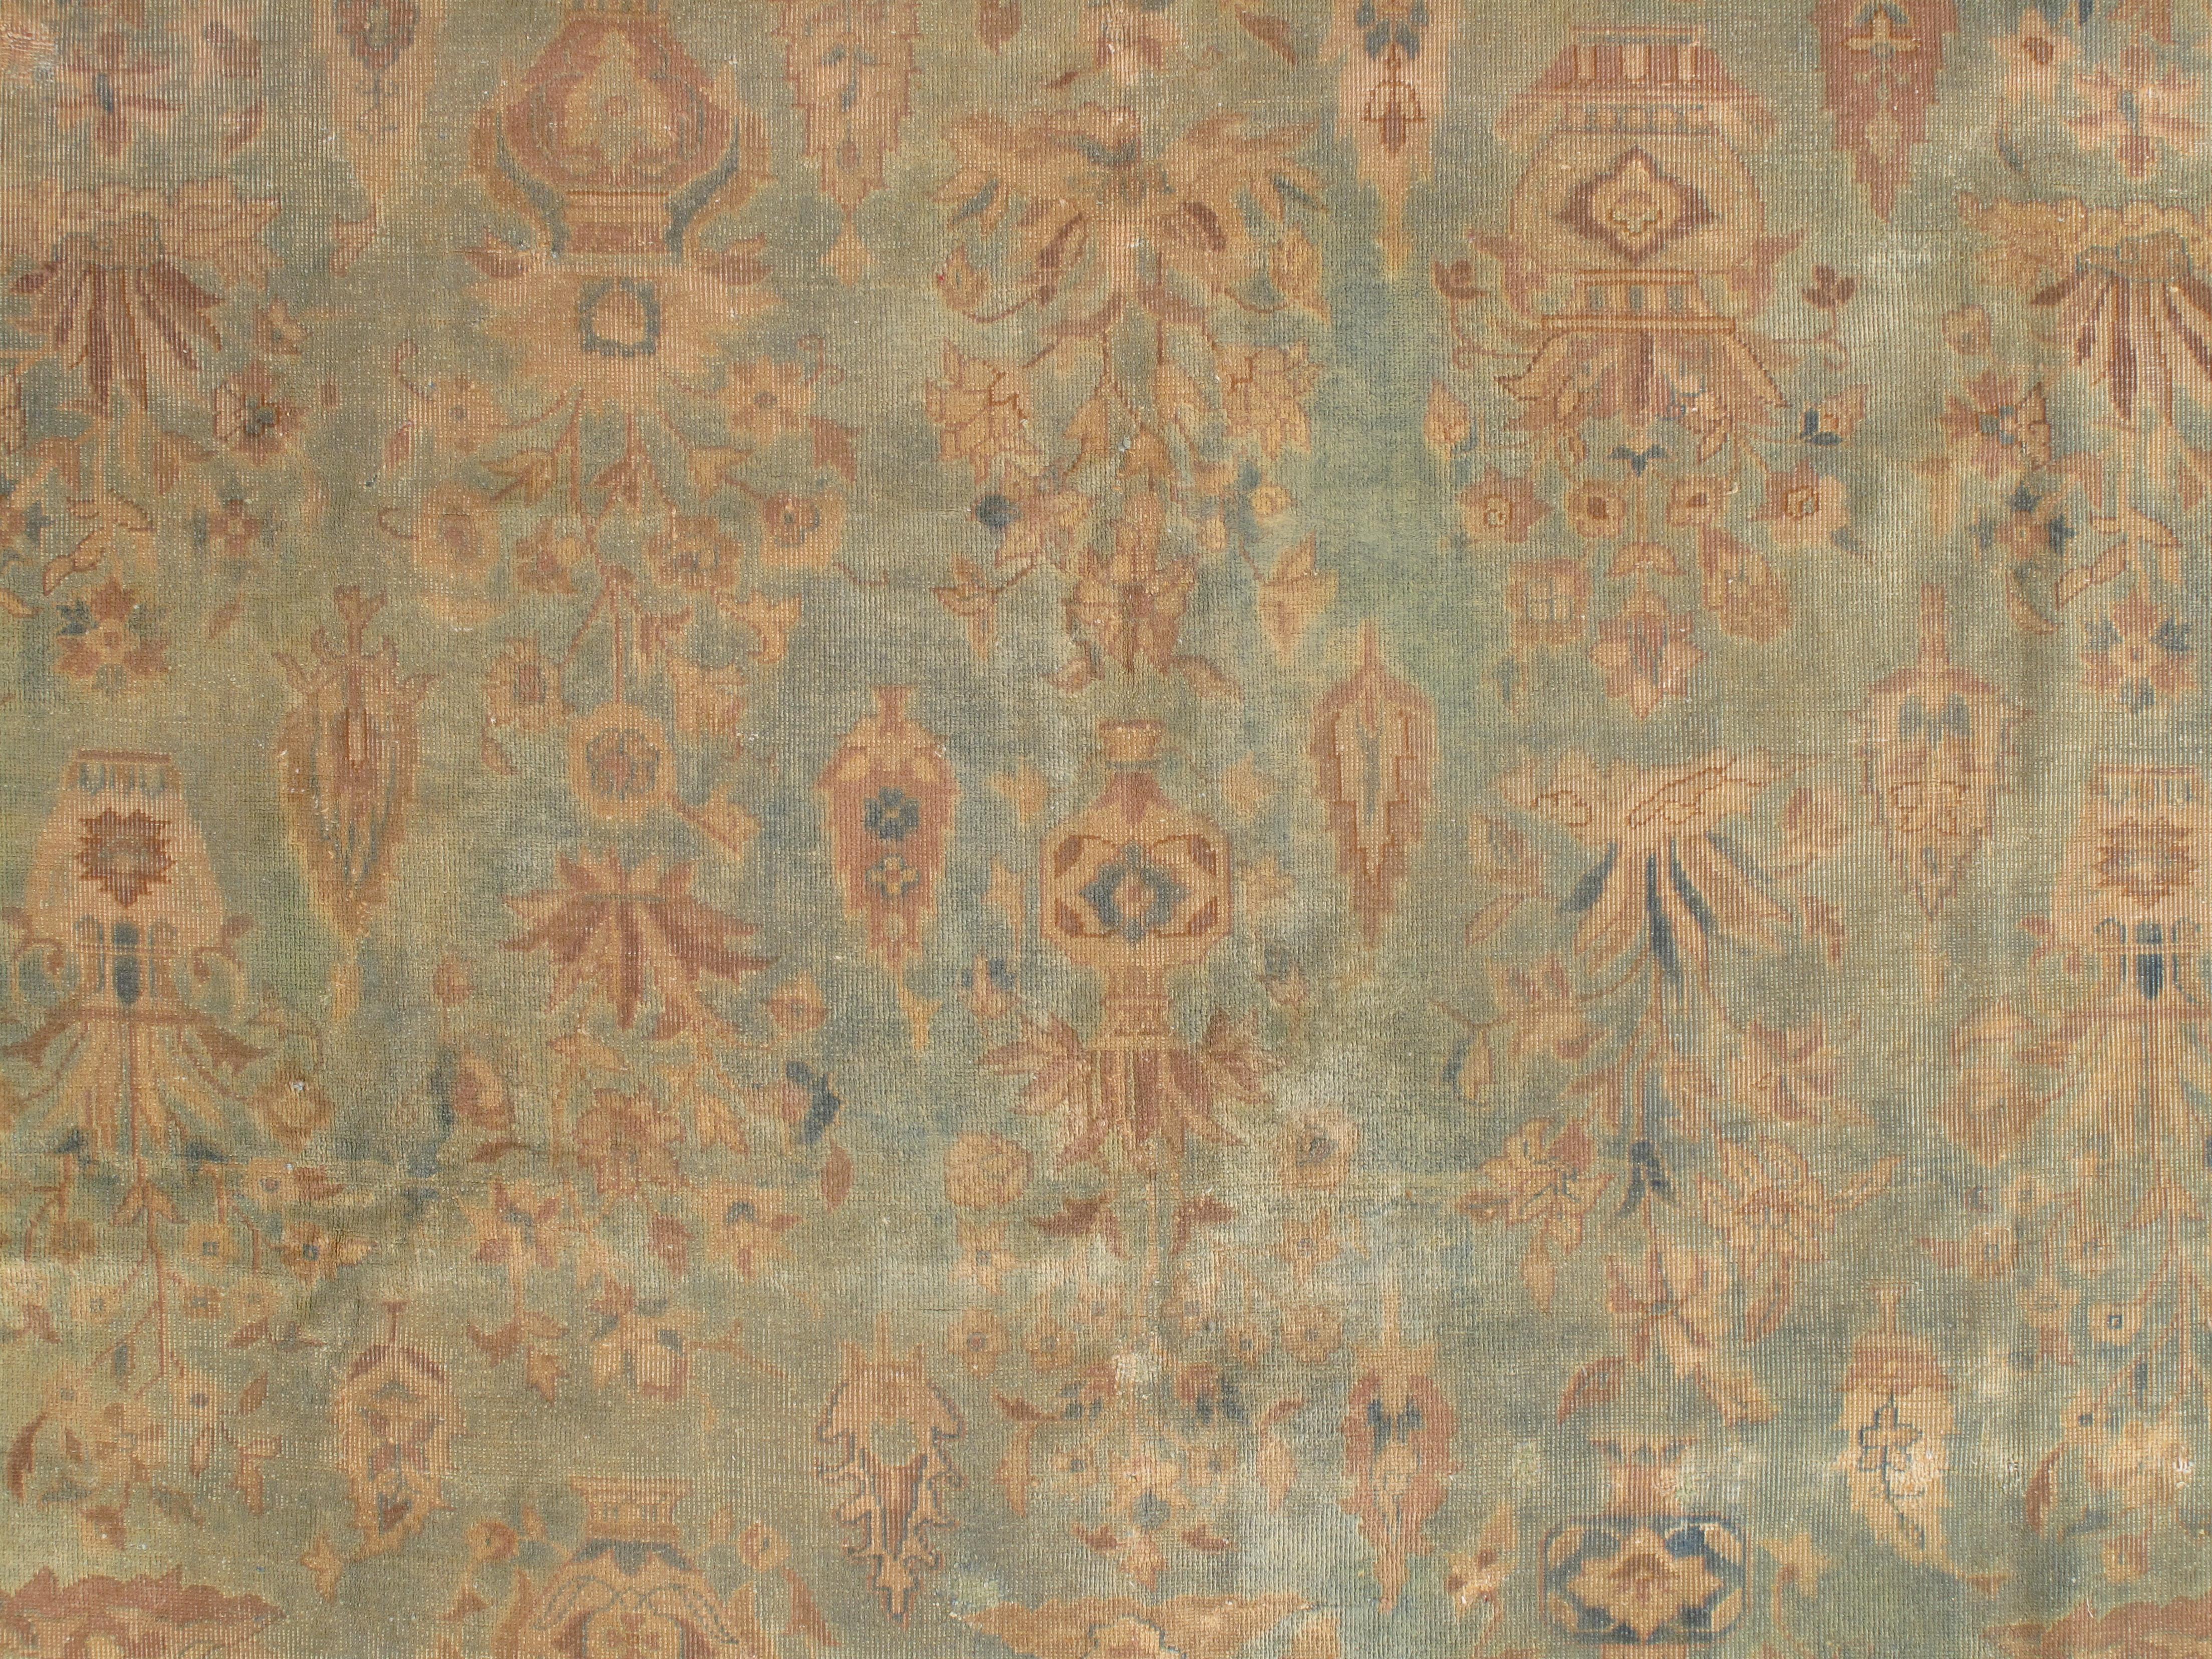 Antique Indian Agra Carpet, Handmade Rug, Green - Blue, Taupe, Beige, Allover For Sale 4